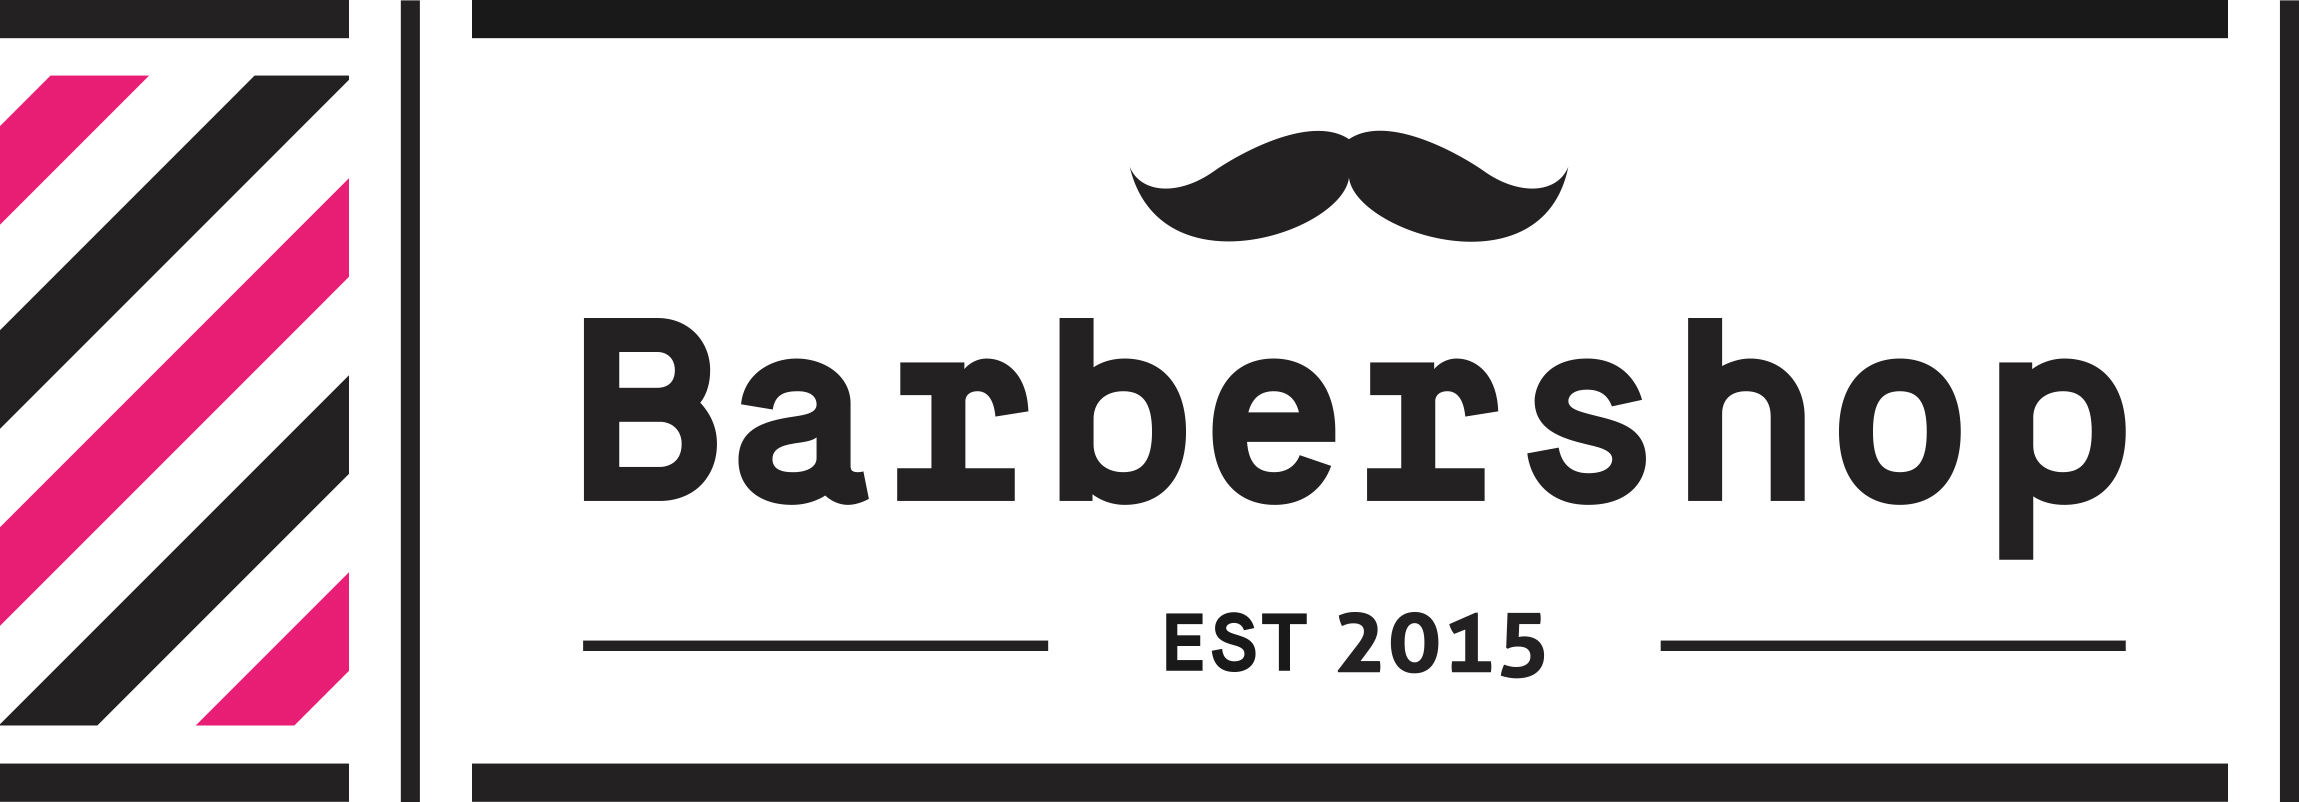 The Barbershop Logo